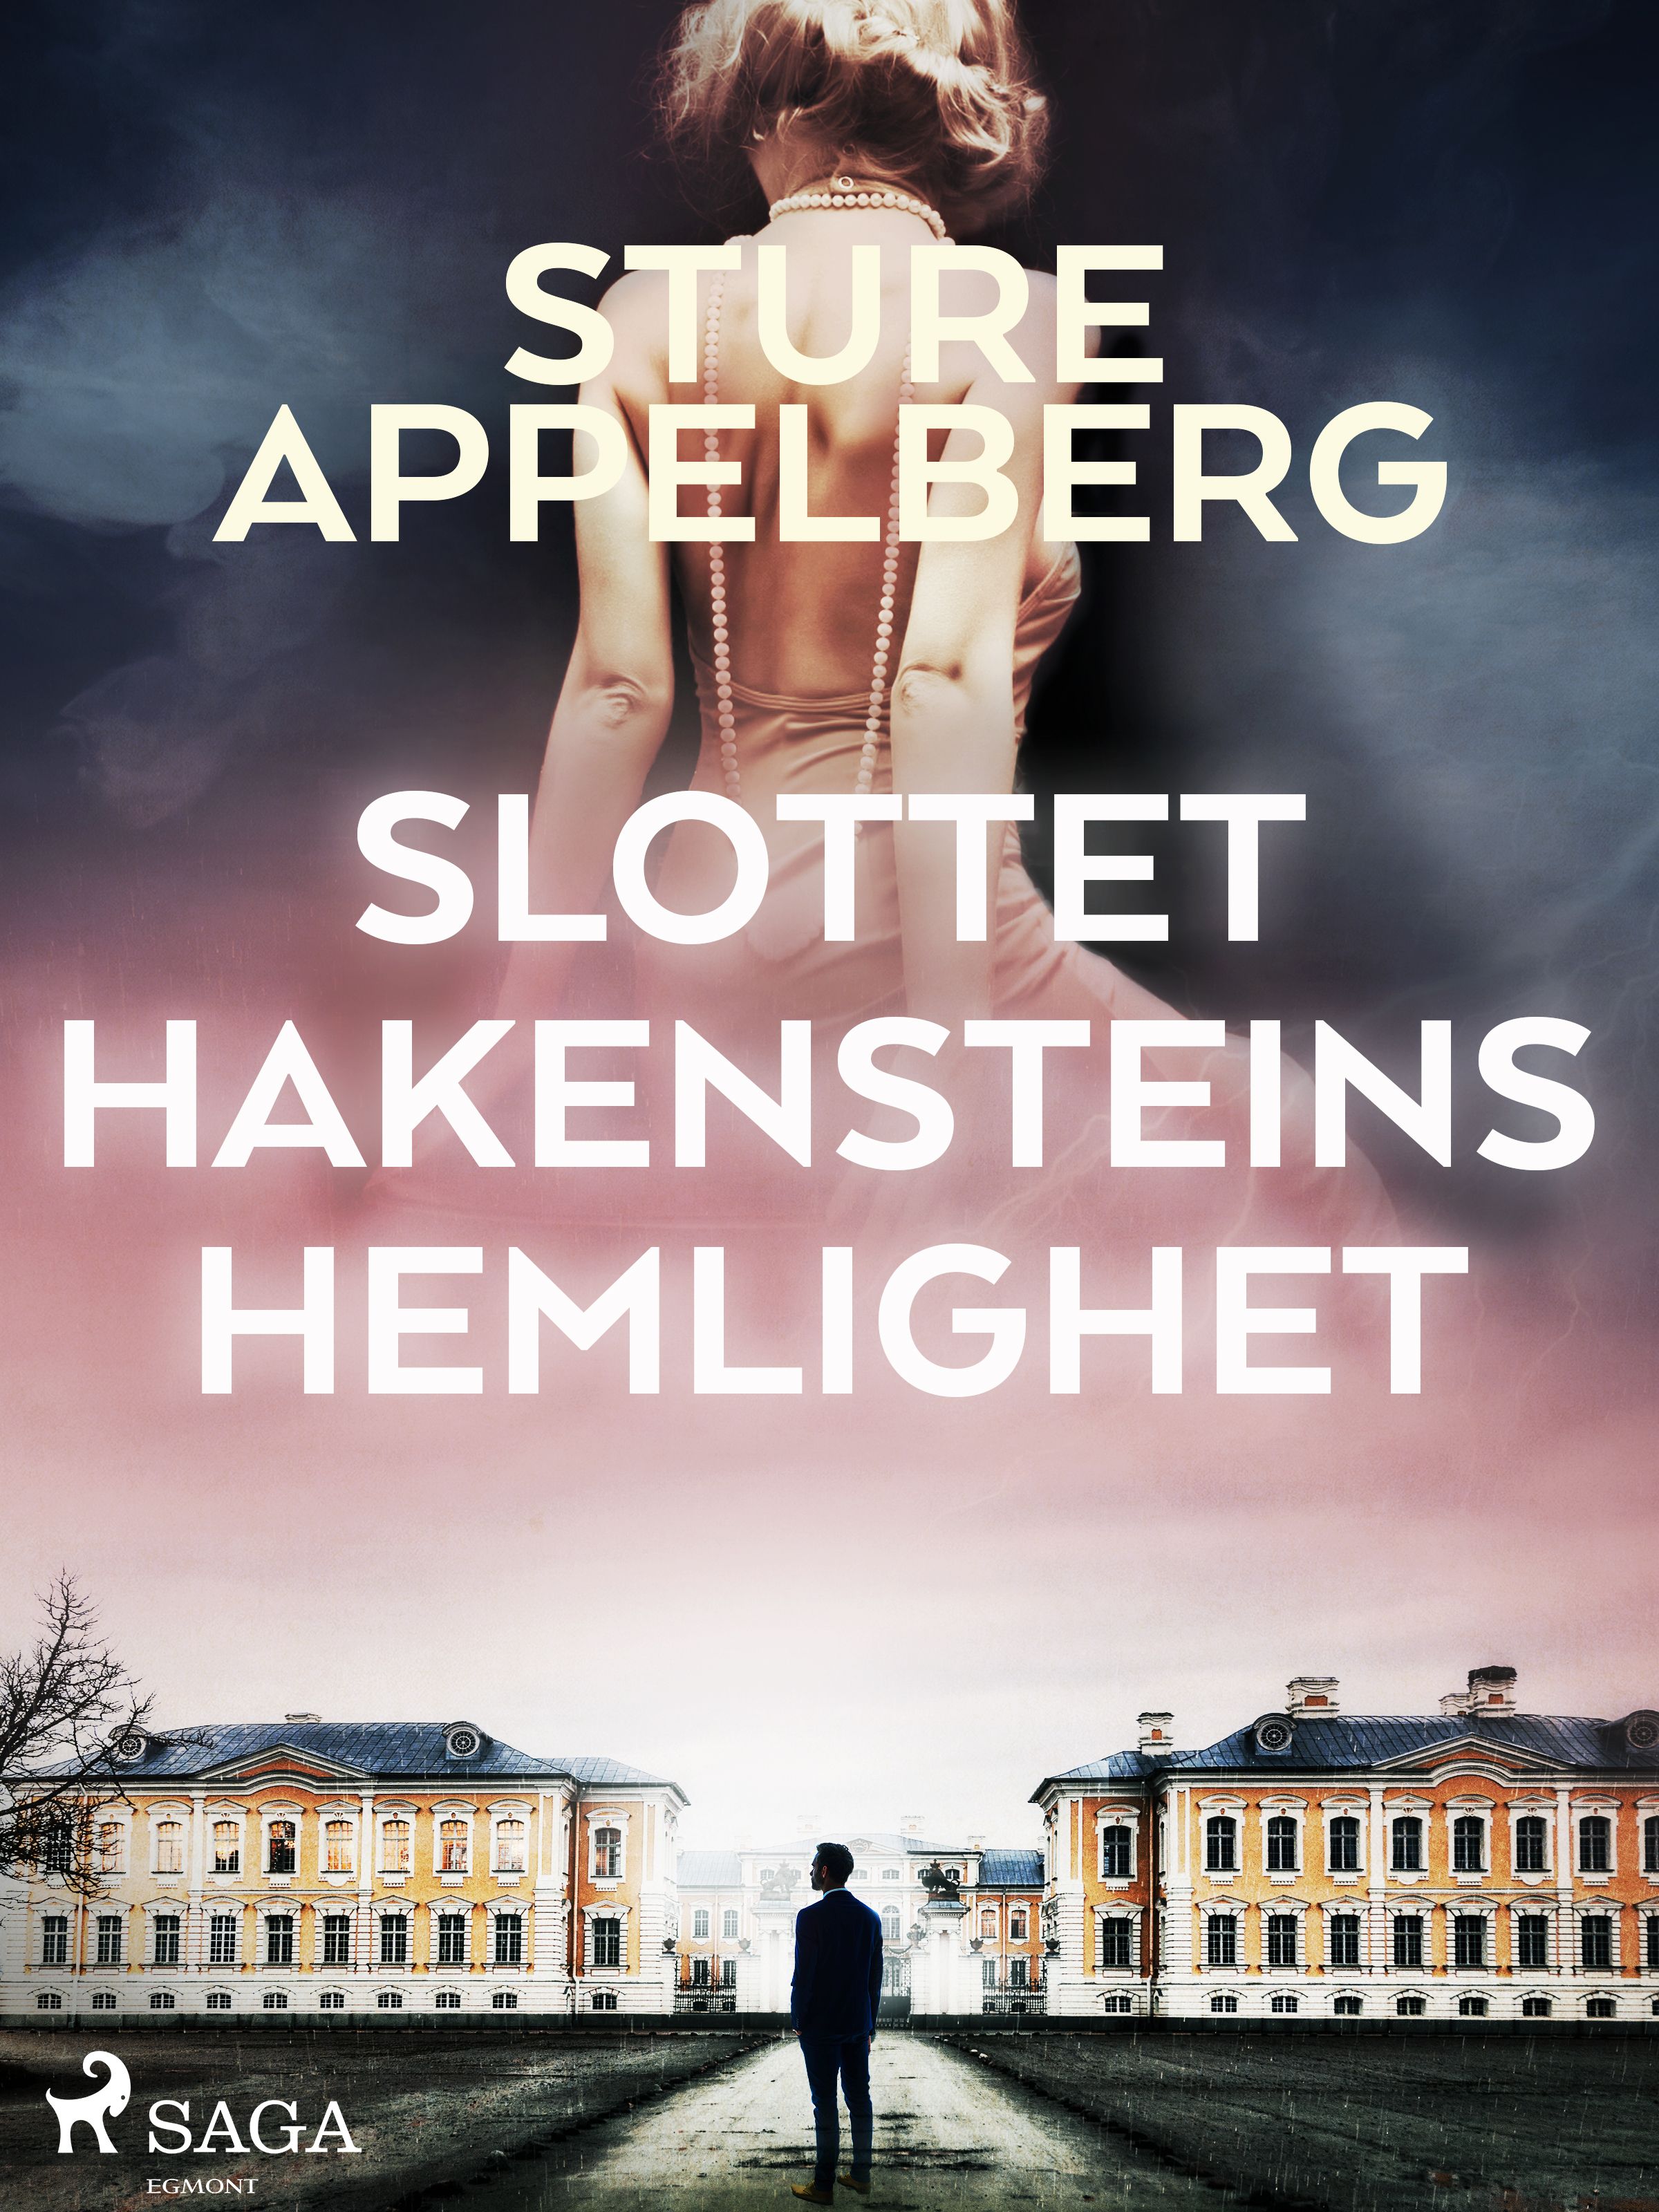 Slottet Hakensteins hemlighet, eBook by Sture Appelberg